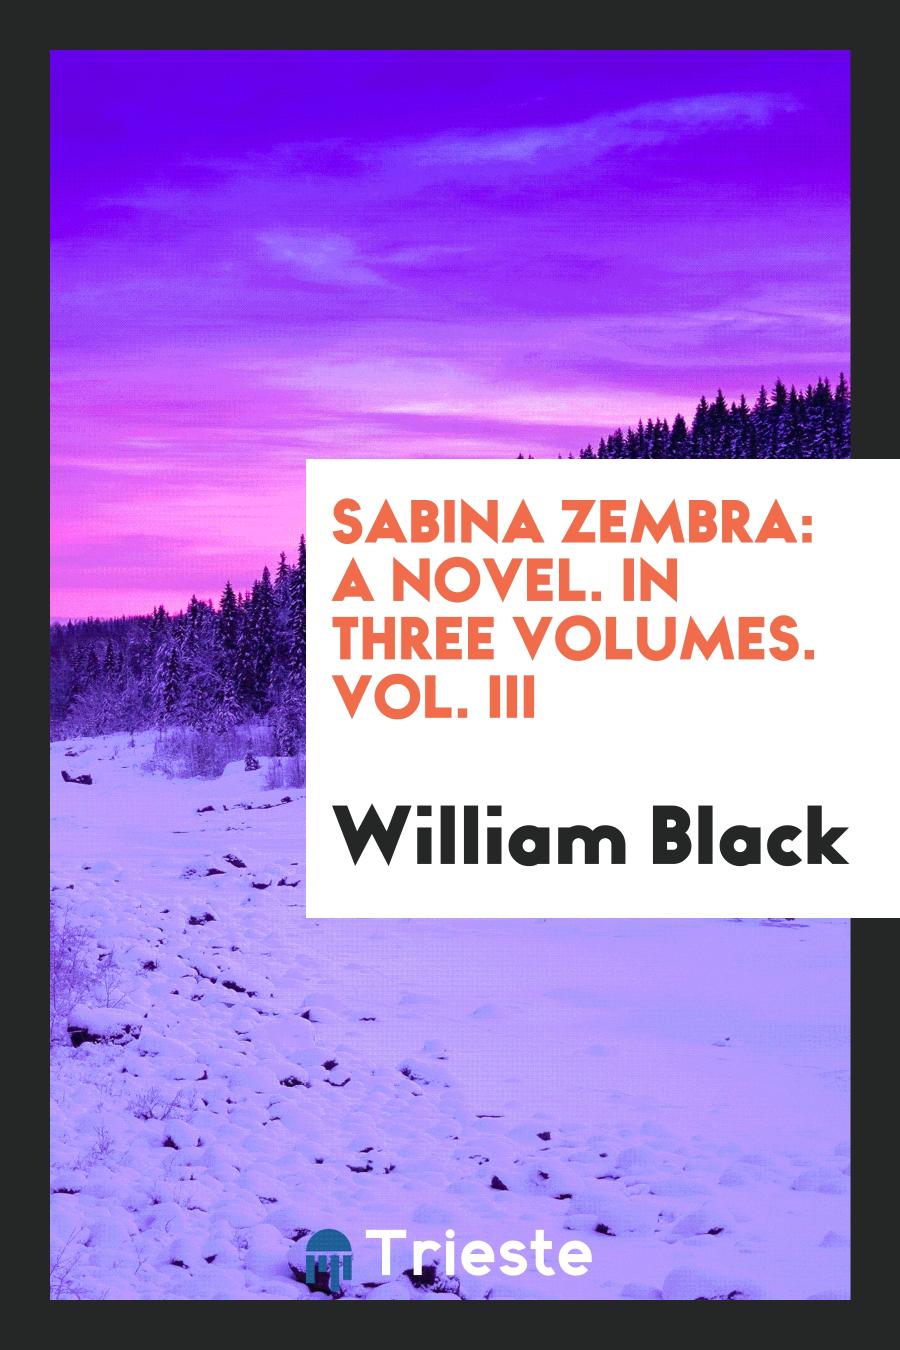 Sabina Zembra: A Novel. In Three Volumes. Vol. III